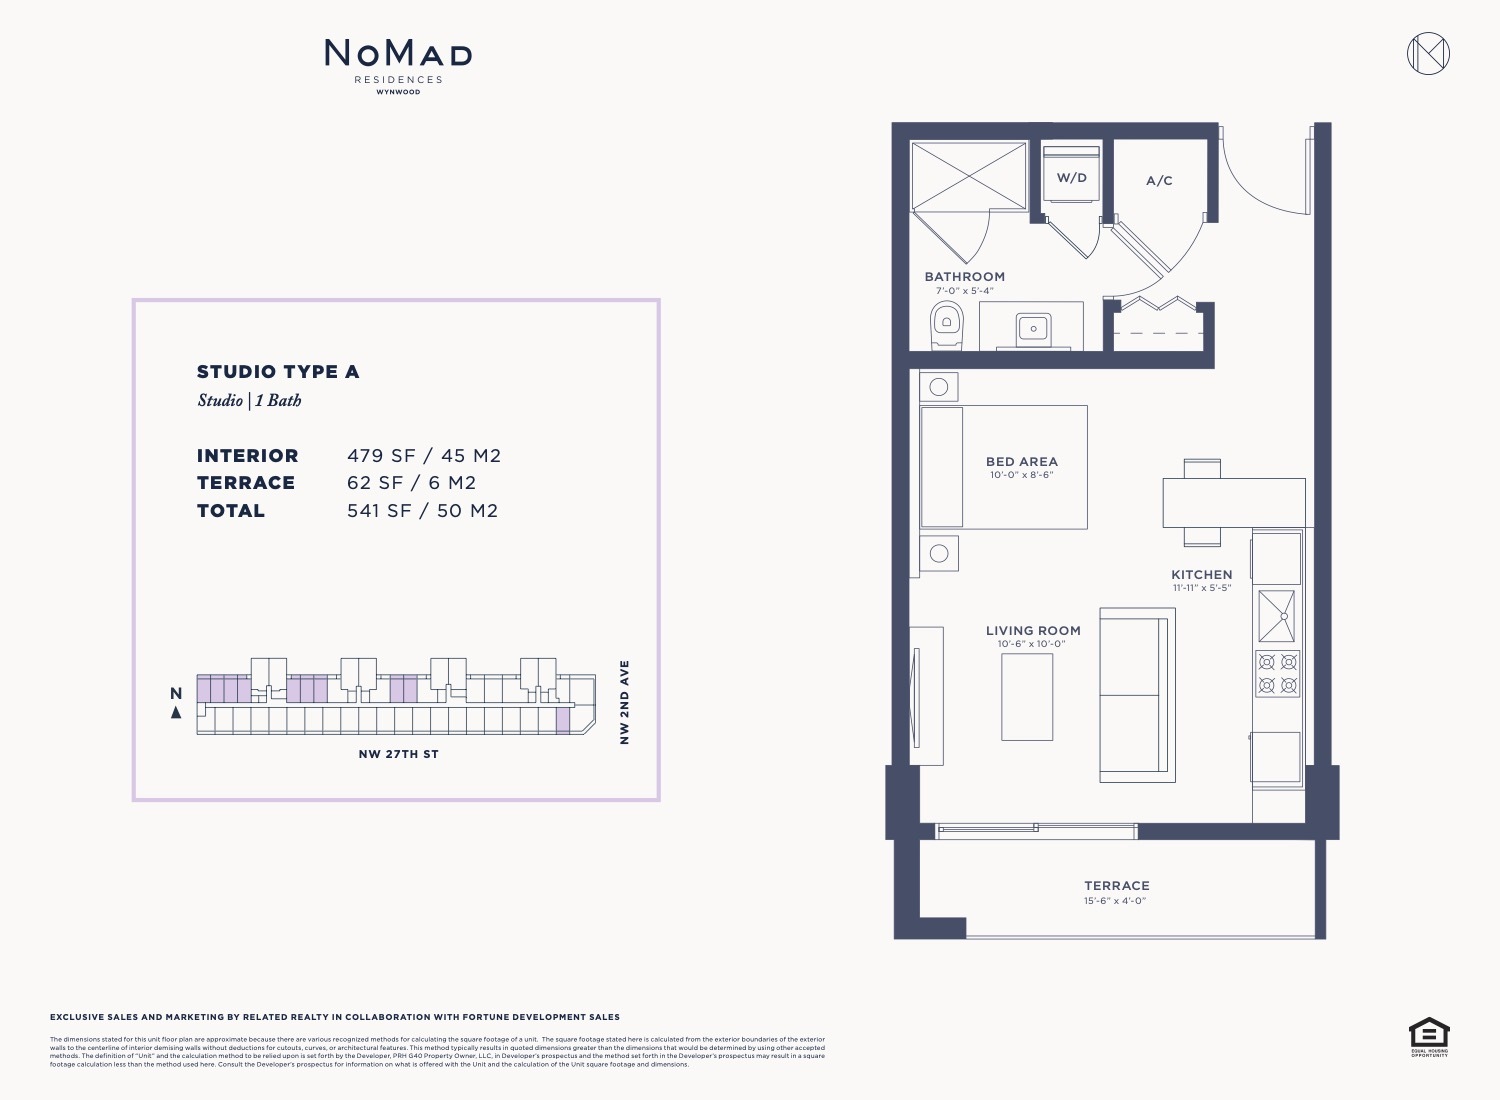 Floor Plan for Nomad Wynwood Floorplans, Studio Type A